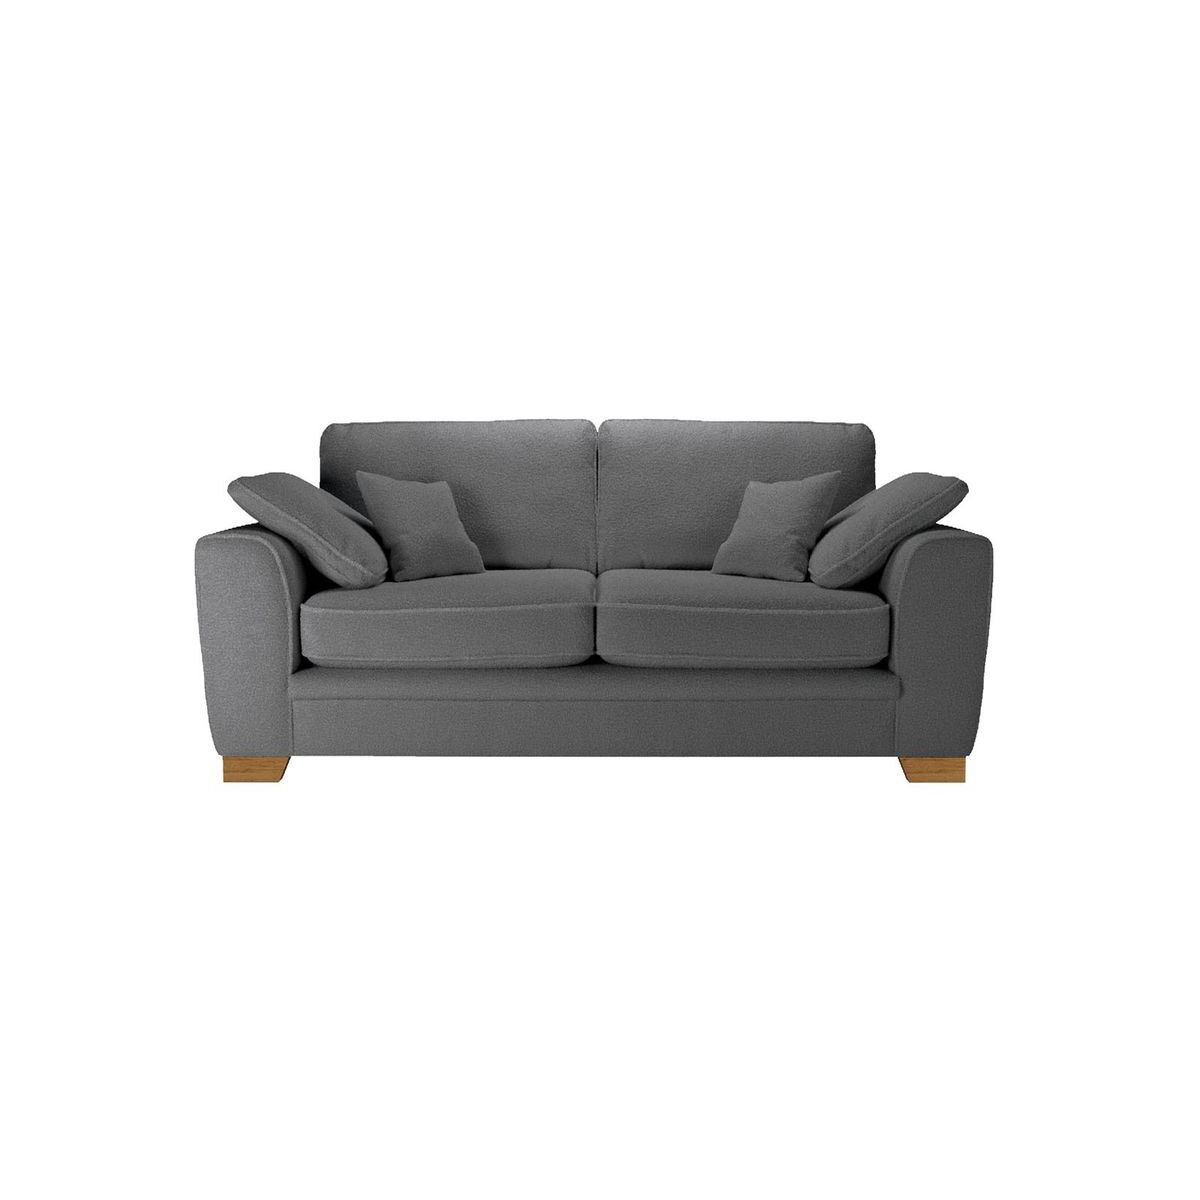 Ronay 2-seater Sofa, boucle grey, Leg colour: aveo - image 1